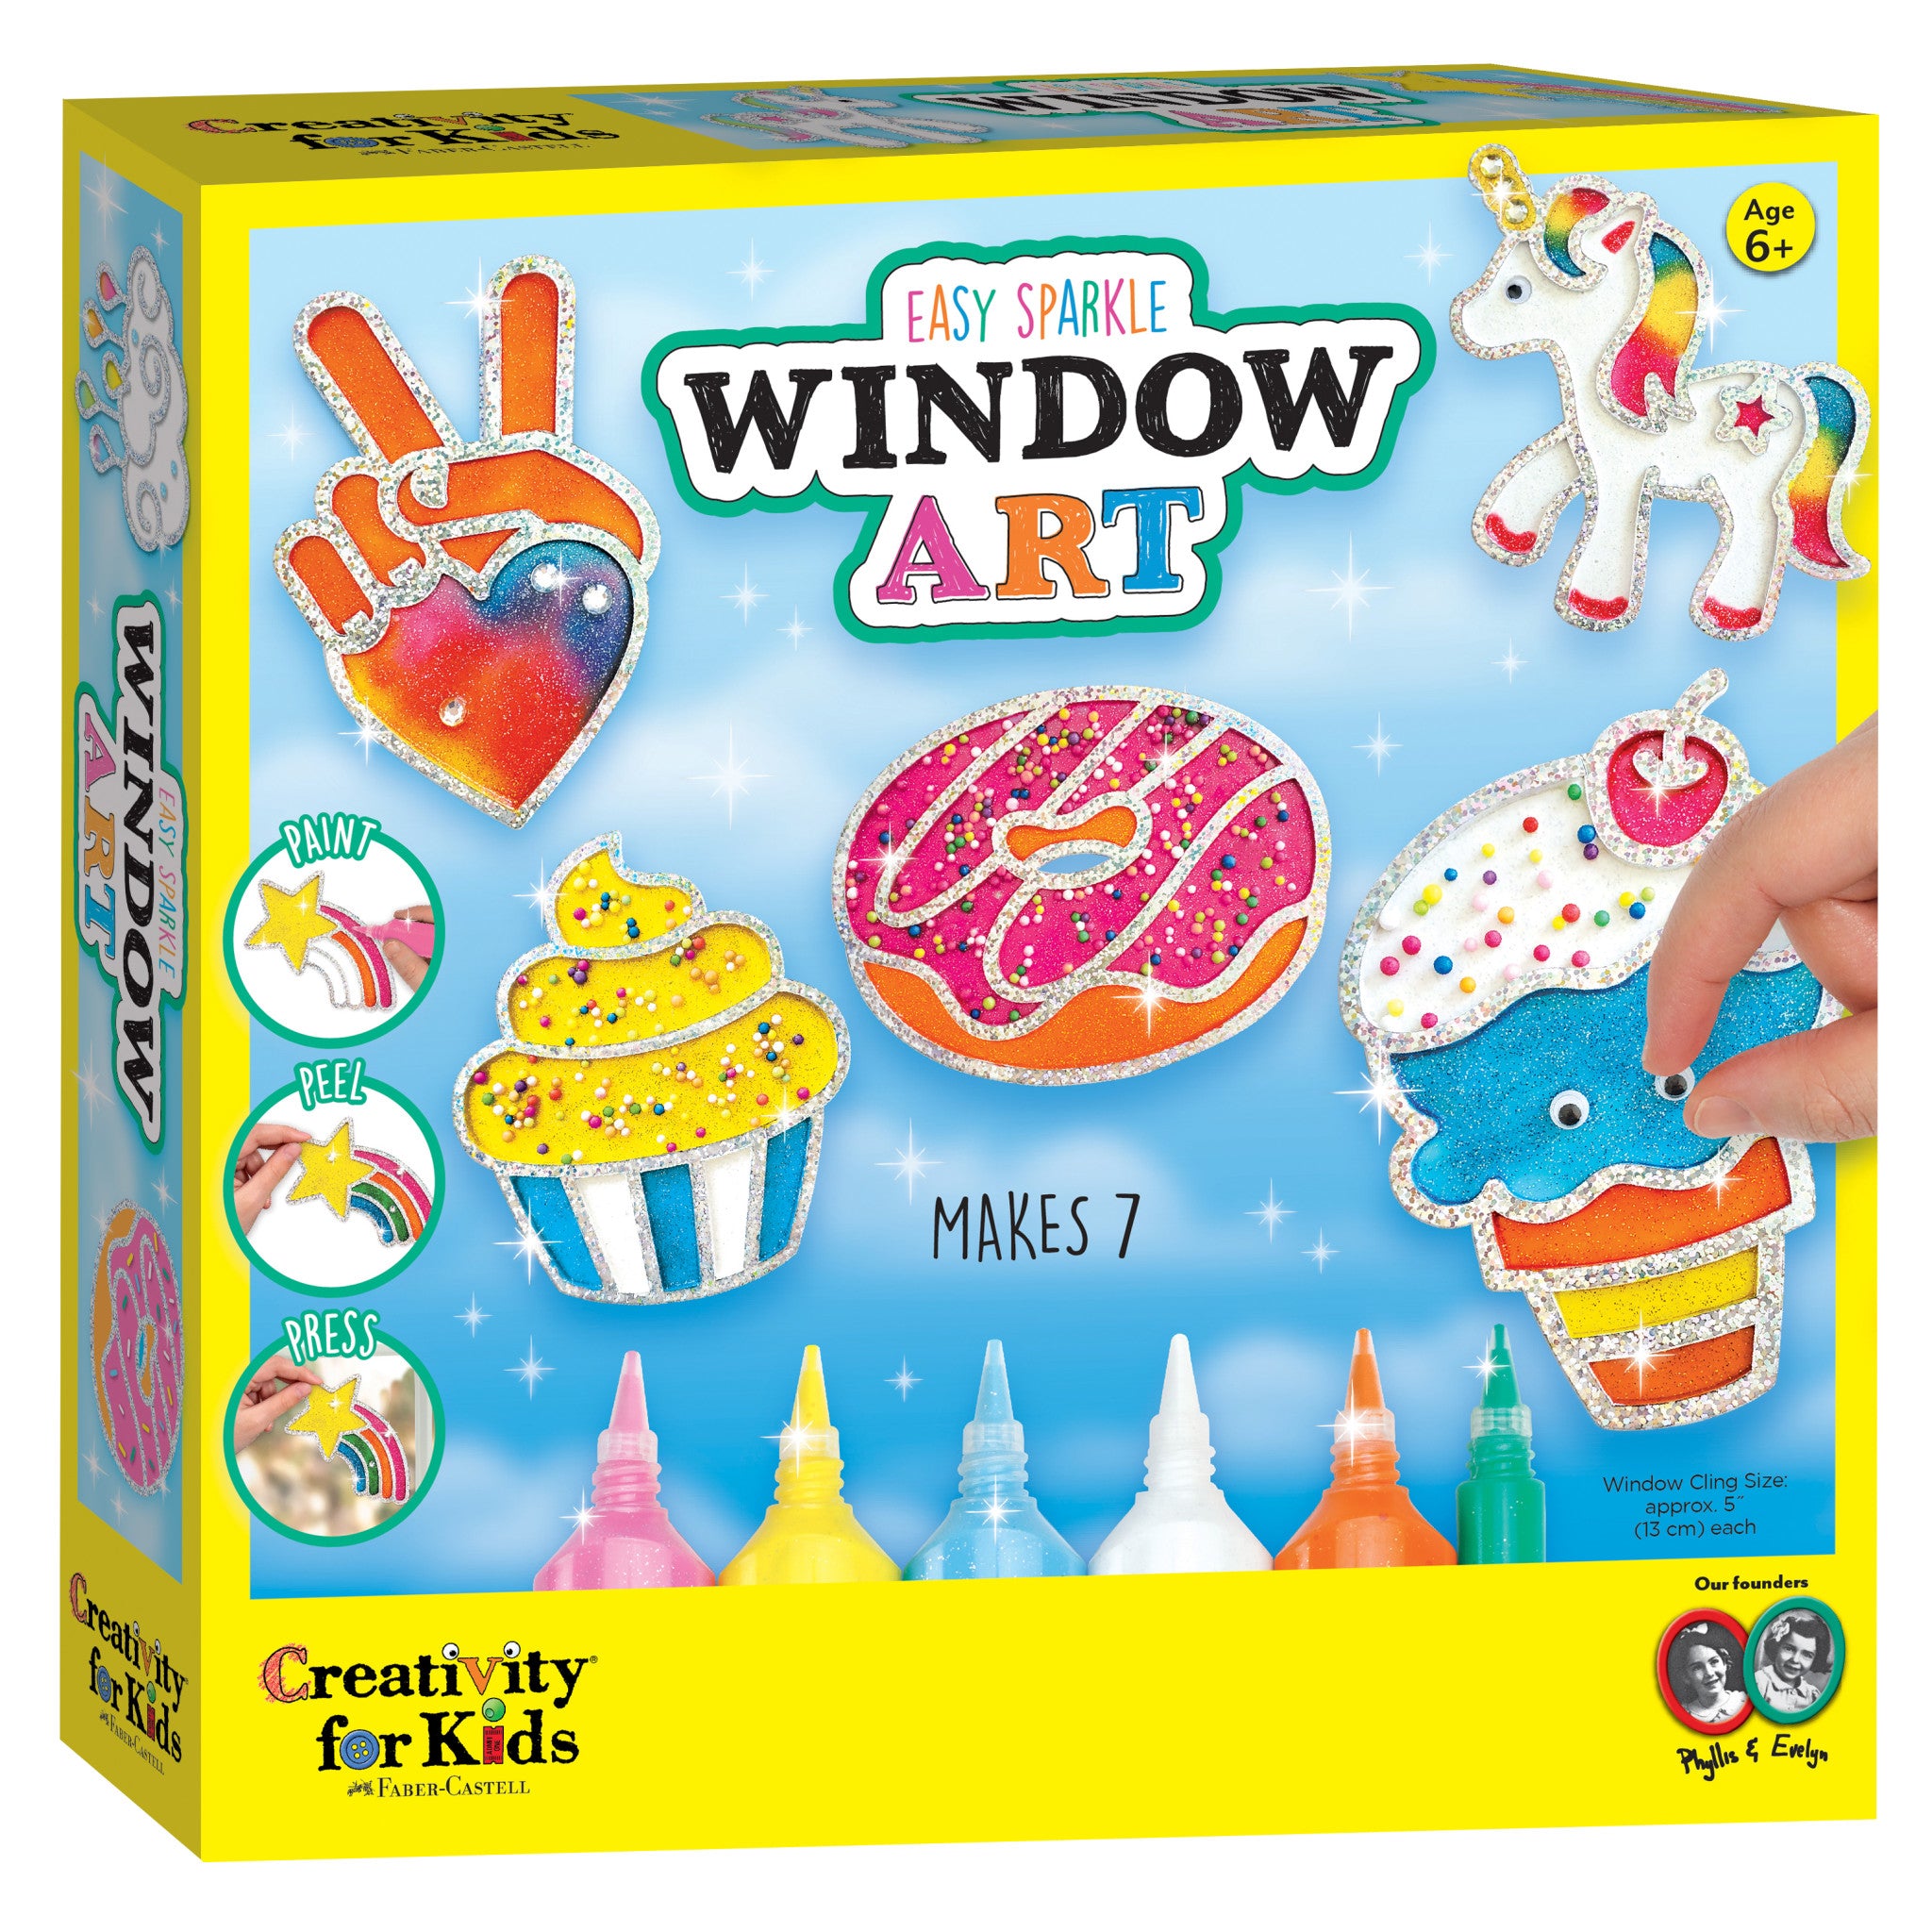 Creativity for Kids Window Art Mini Kits